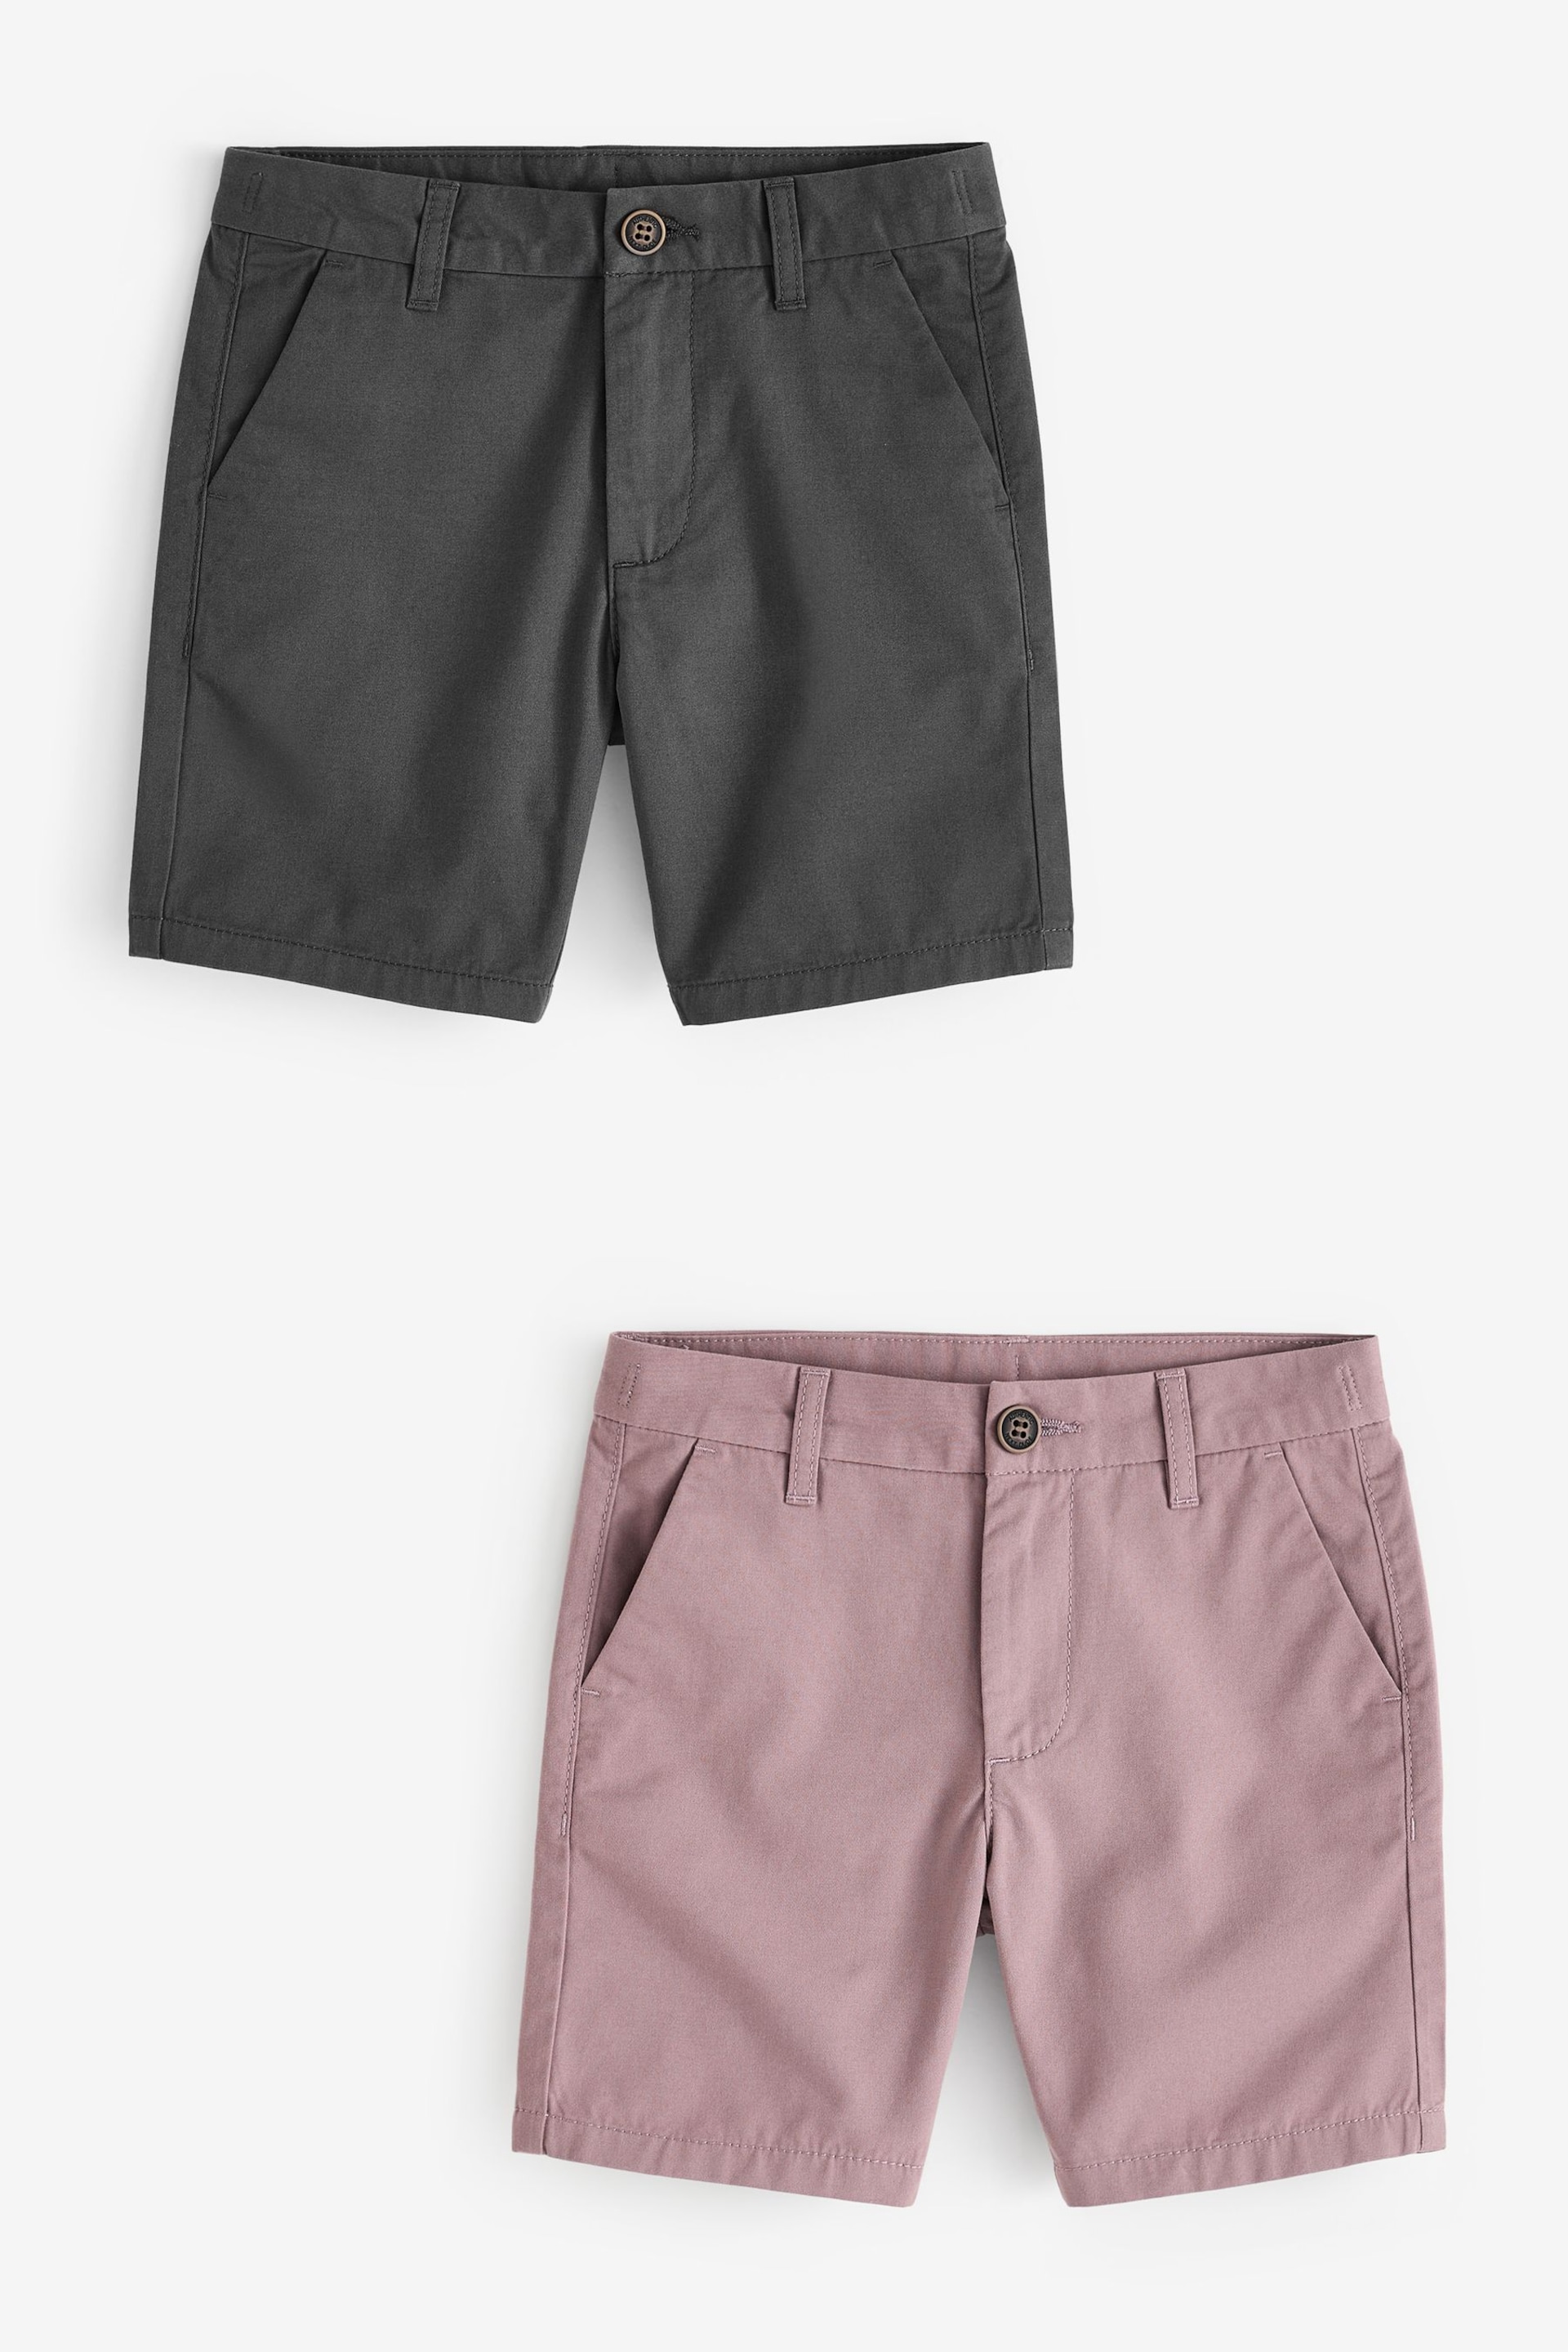 Charcoal Grey/Pink Chino Shorts 2 Pack (3-16yrs) - Image 1 of 5